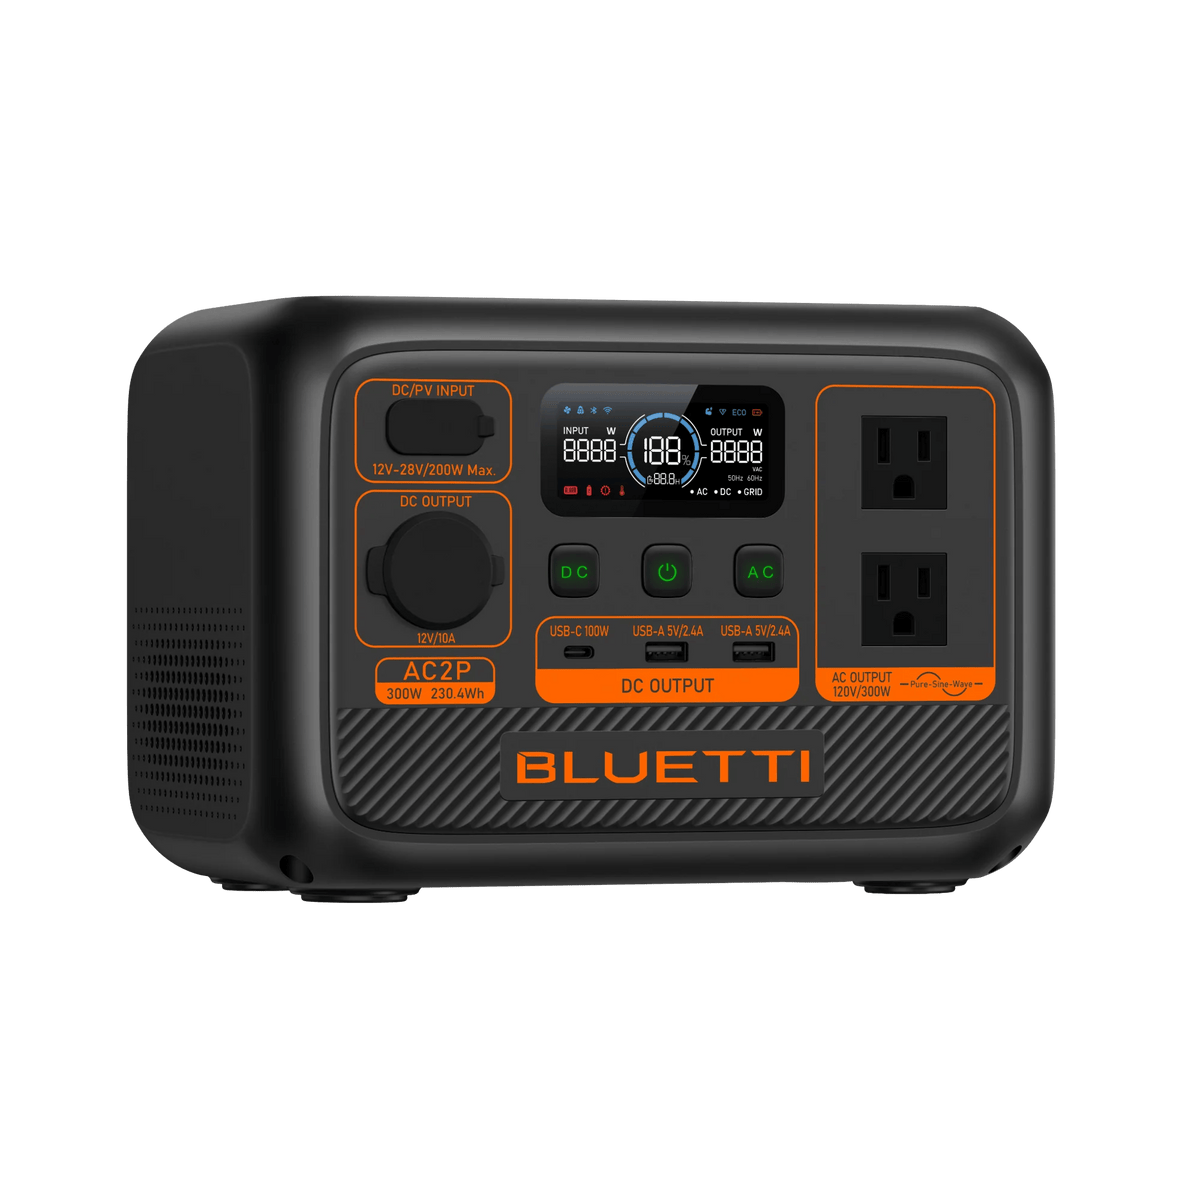 Bluetti Power Station Bluetti AC2P Portable Power Station | 300W 230.4Wh